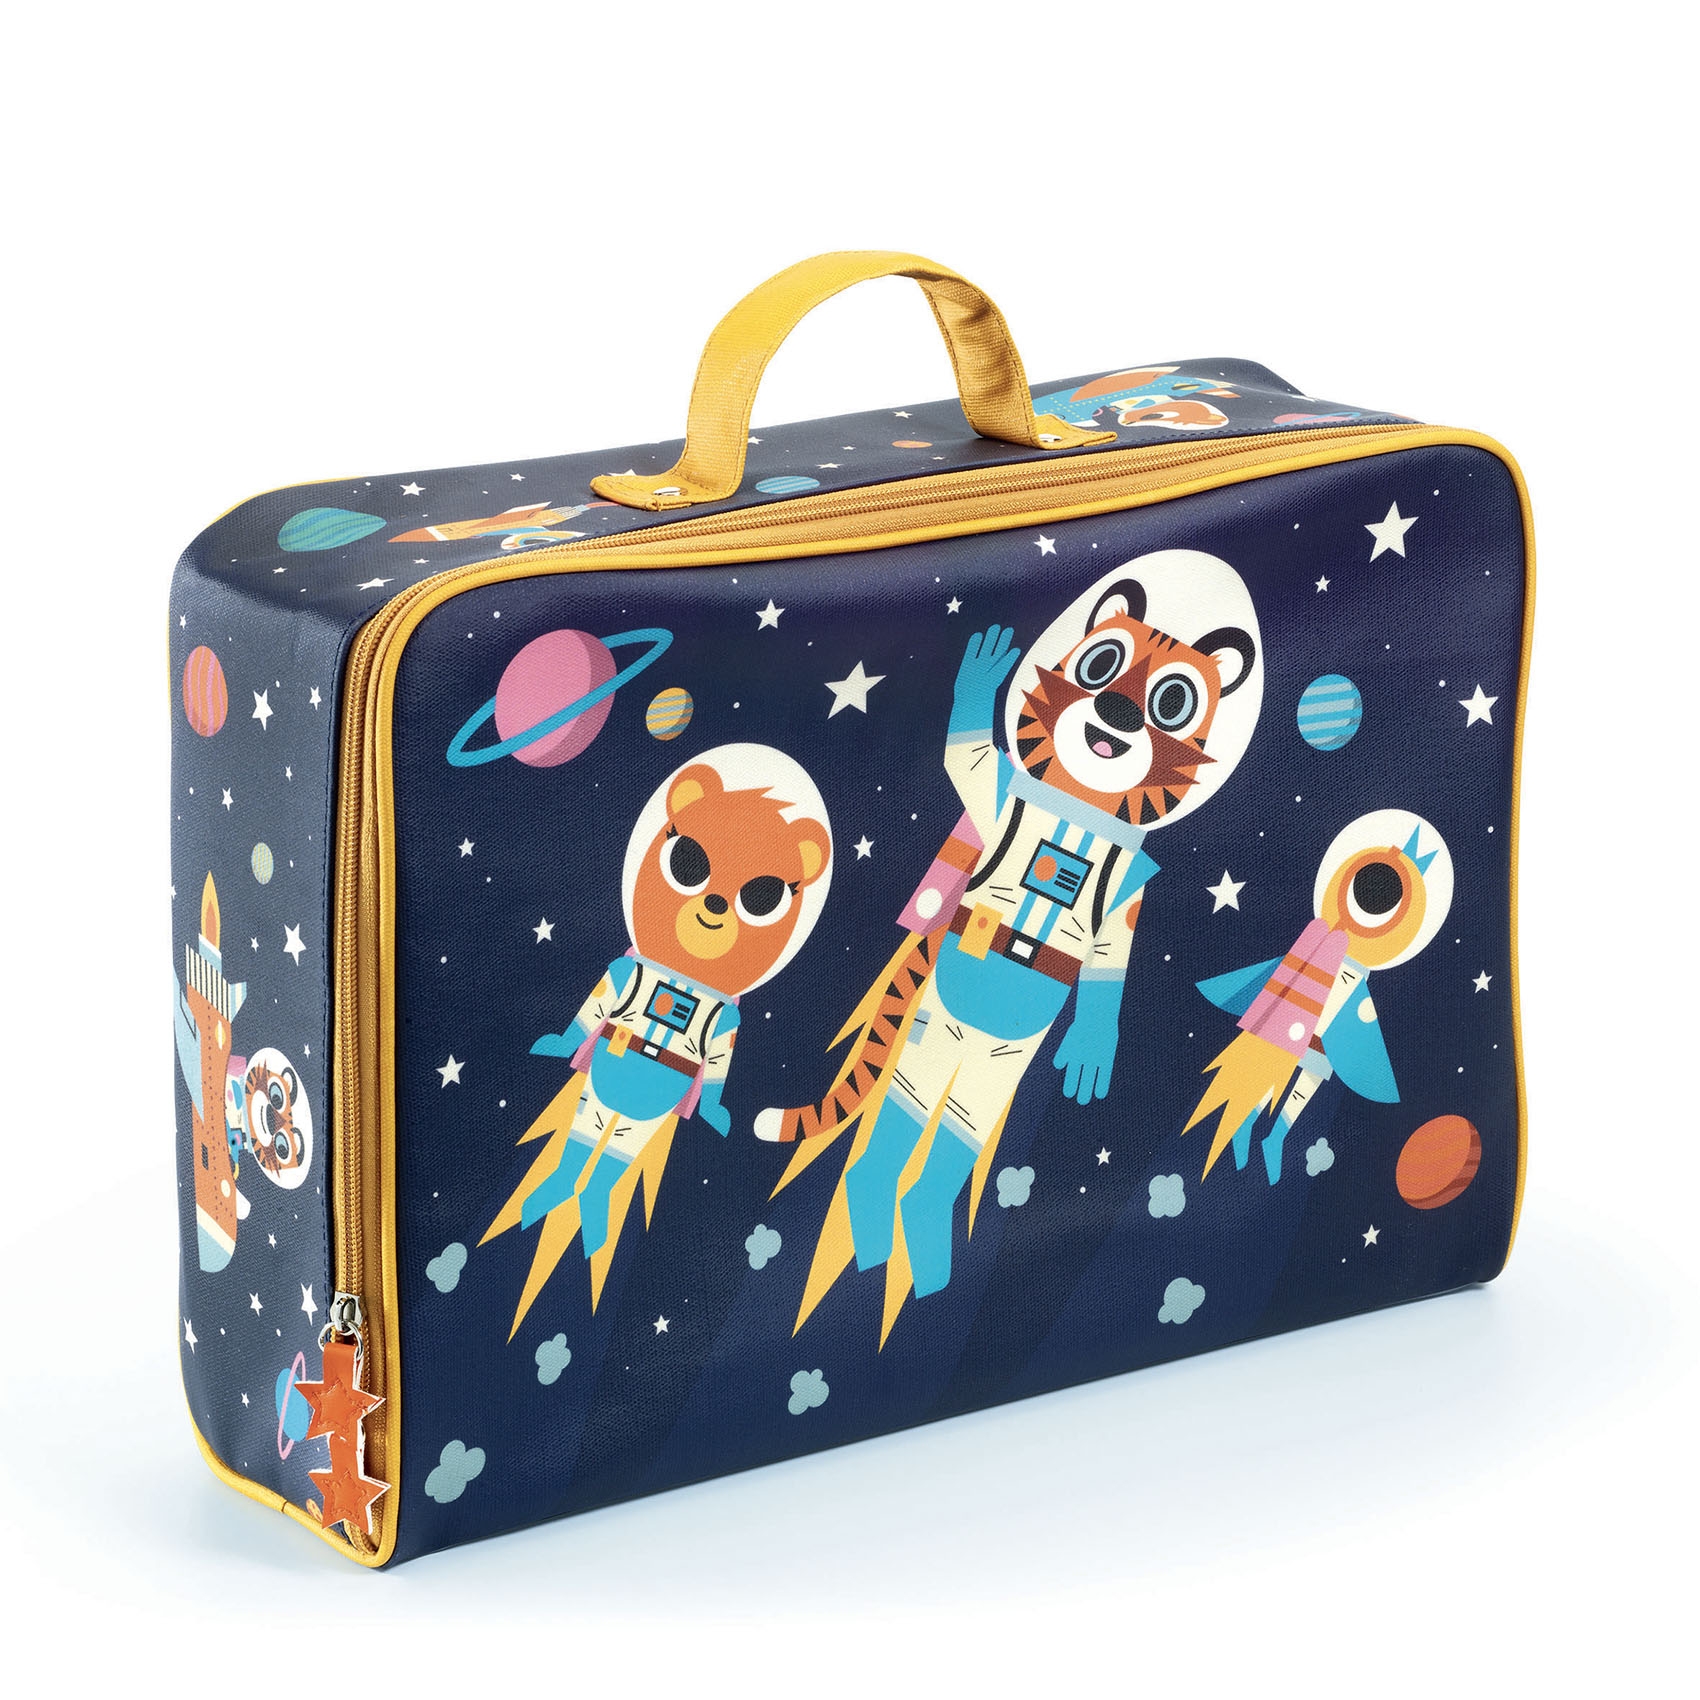 Trendi kis bőrönd - Űrutazás - Space suitcase - 0